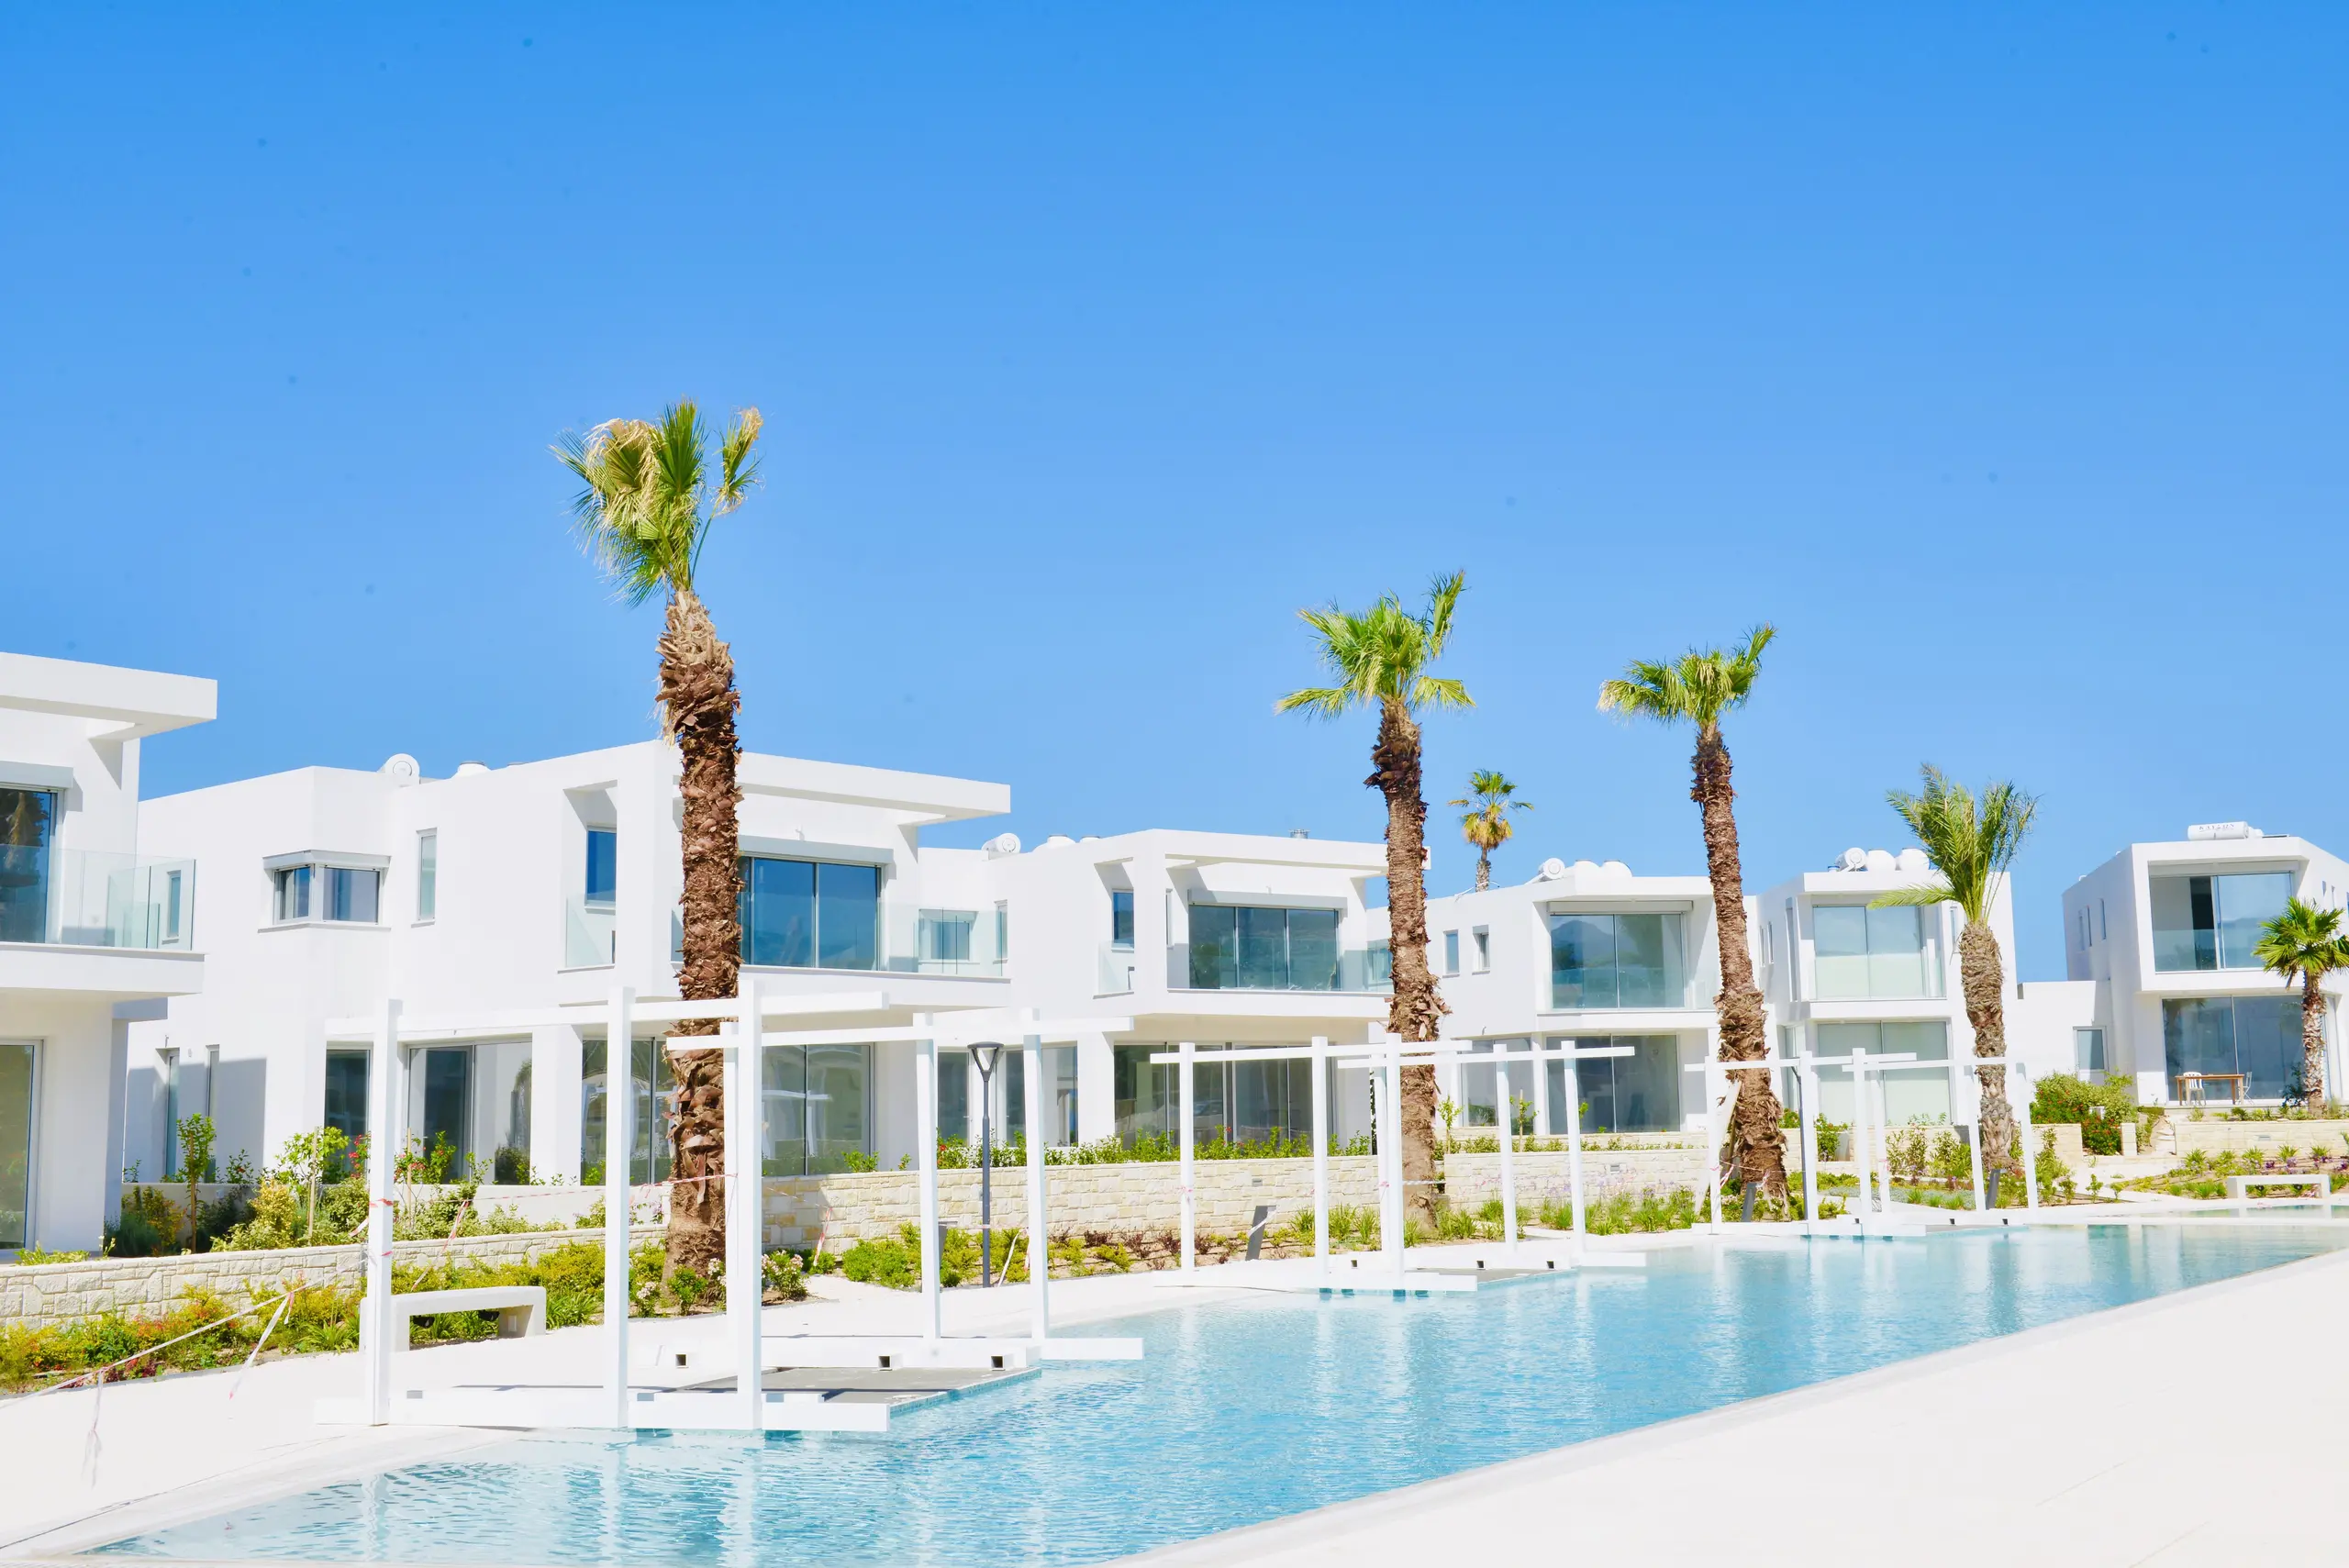 Acropolis Homes - Coral Seas Villas - Immobilienagentur - Immobilienfoto - Immobilienentwicklung